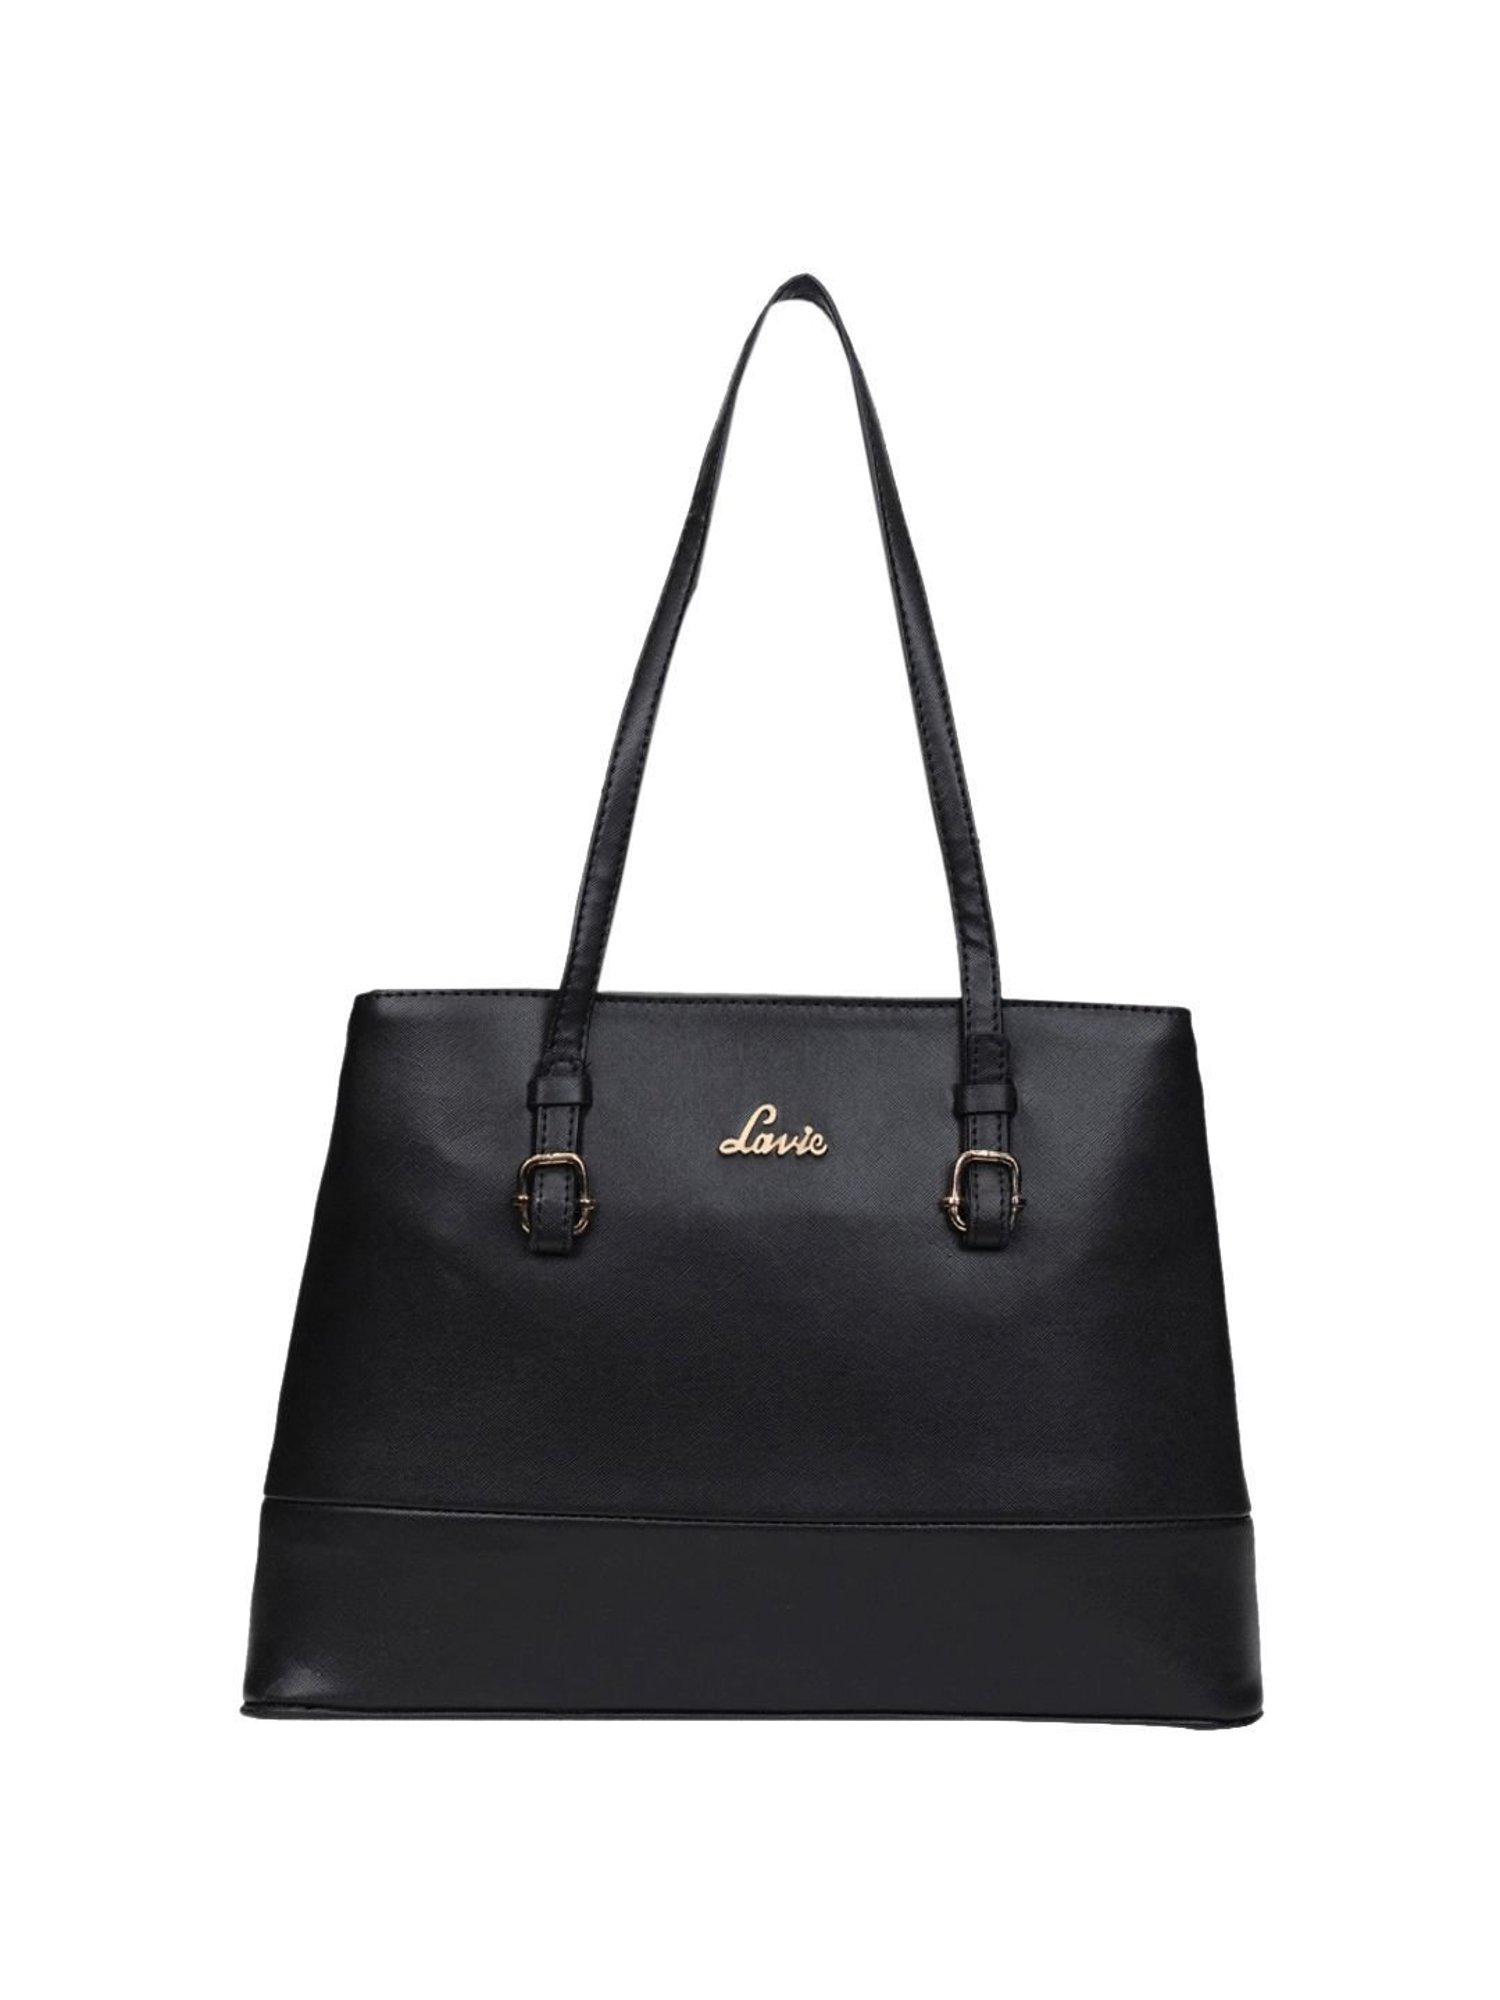 Handbags | Lavie Sling Bag | Freeup